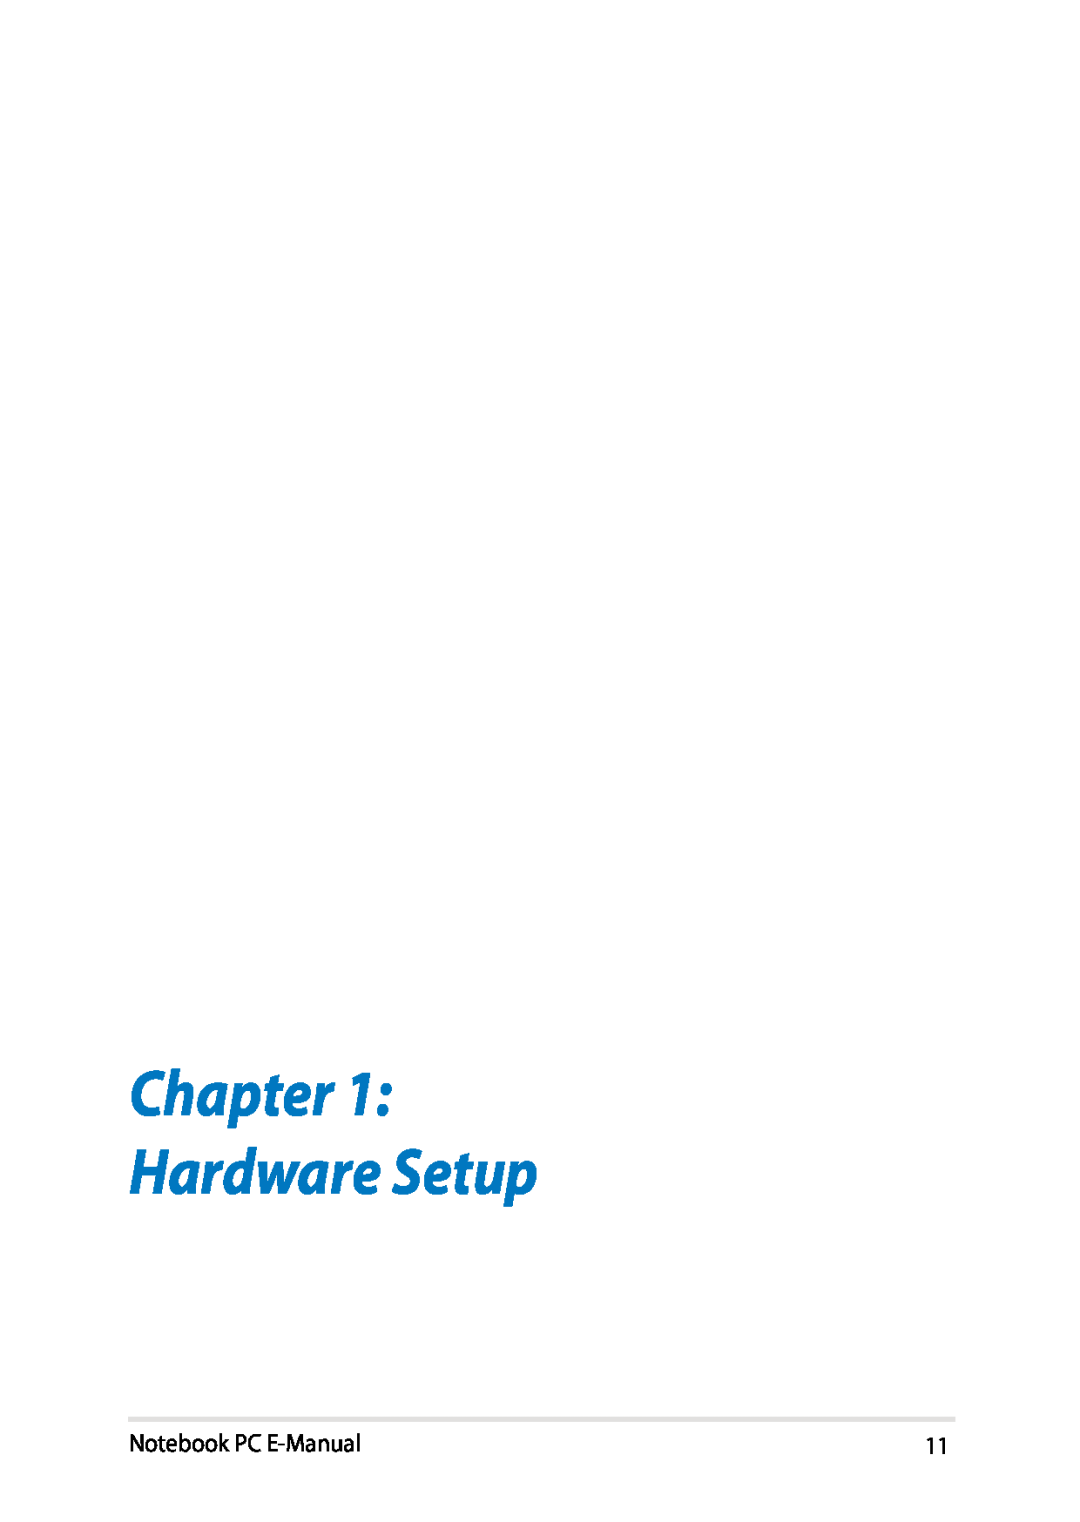 Asus E8438 manual Hardware Setup, Notebook PC E-Manual 